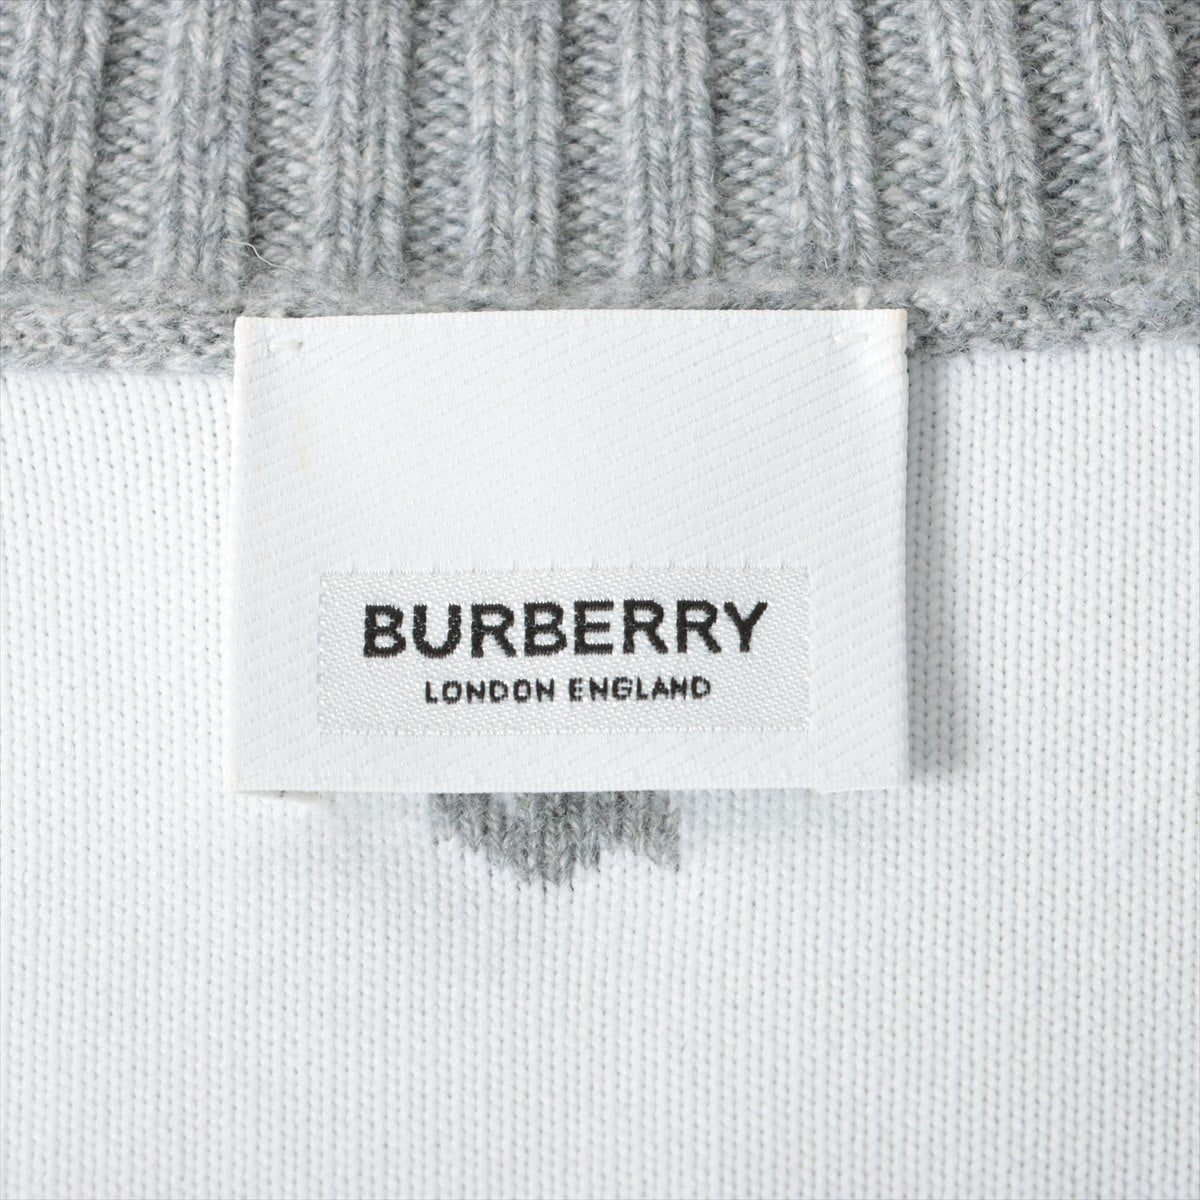 Burberry TB logo Tissi period Wool & polyester Cardigan M Ladies' Grey  8028721